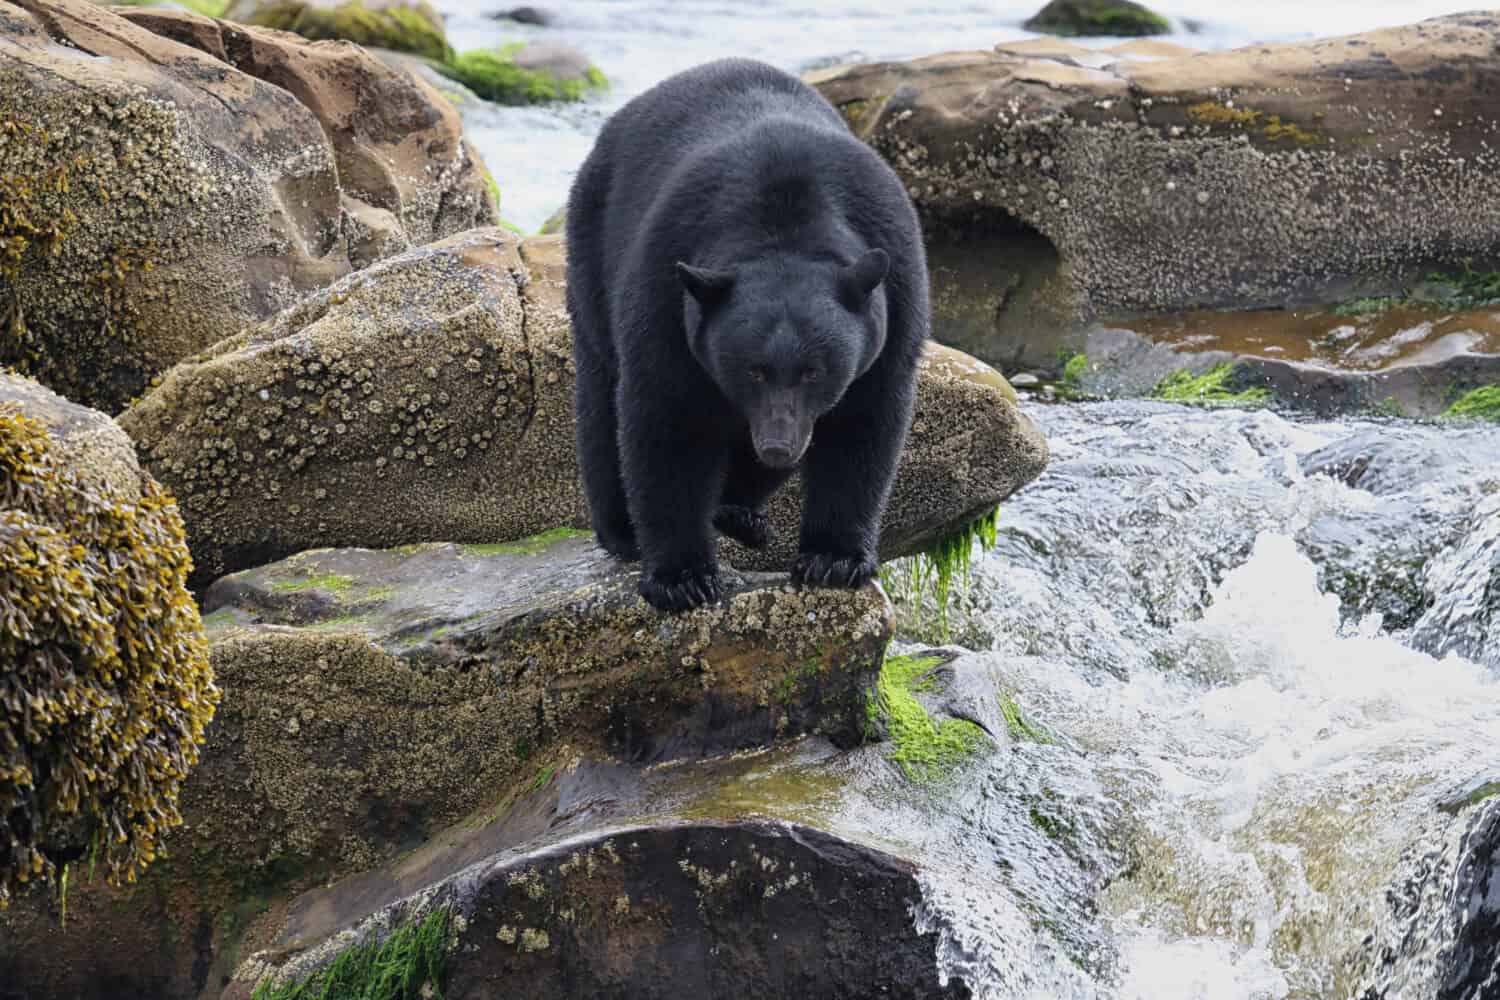 Wild Black Bear (Ursus americanus) by the river fishing. Vancouver Island, British Columbia, Canada.